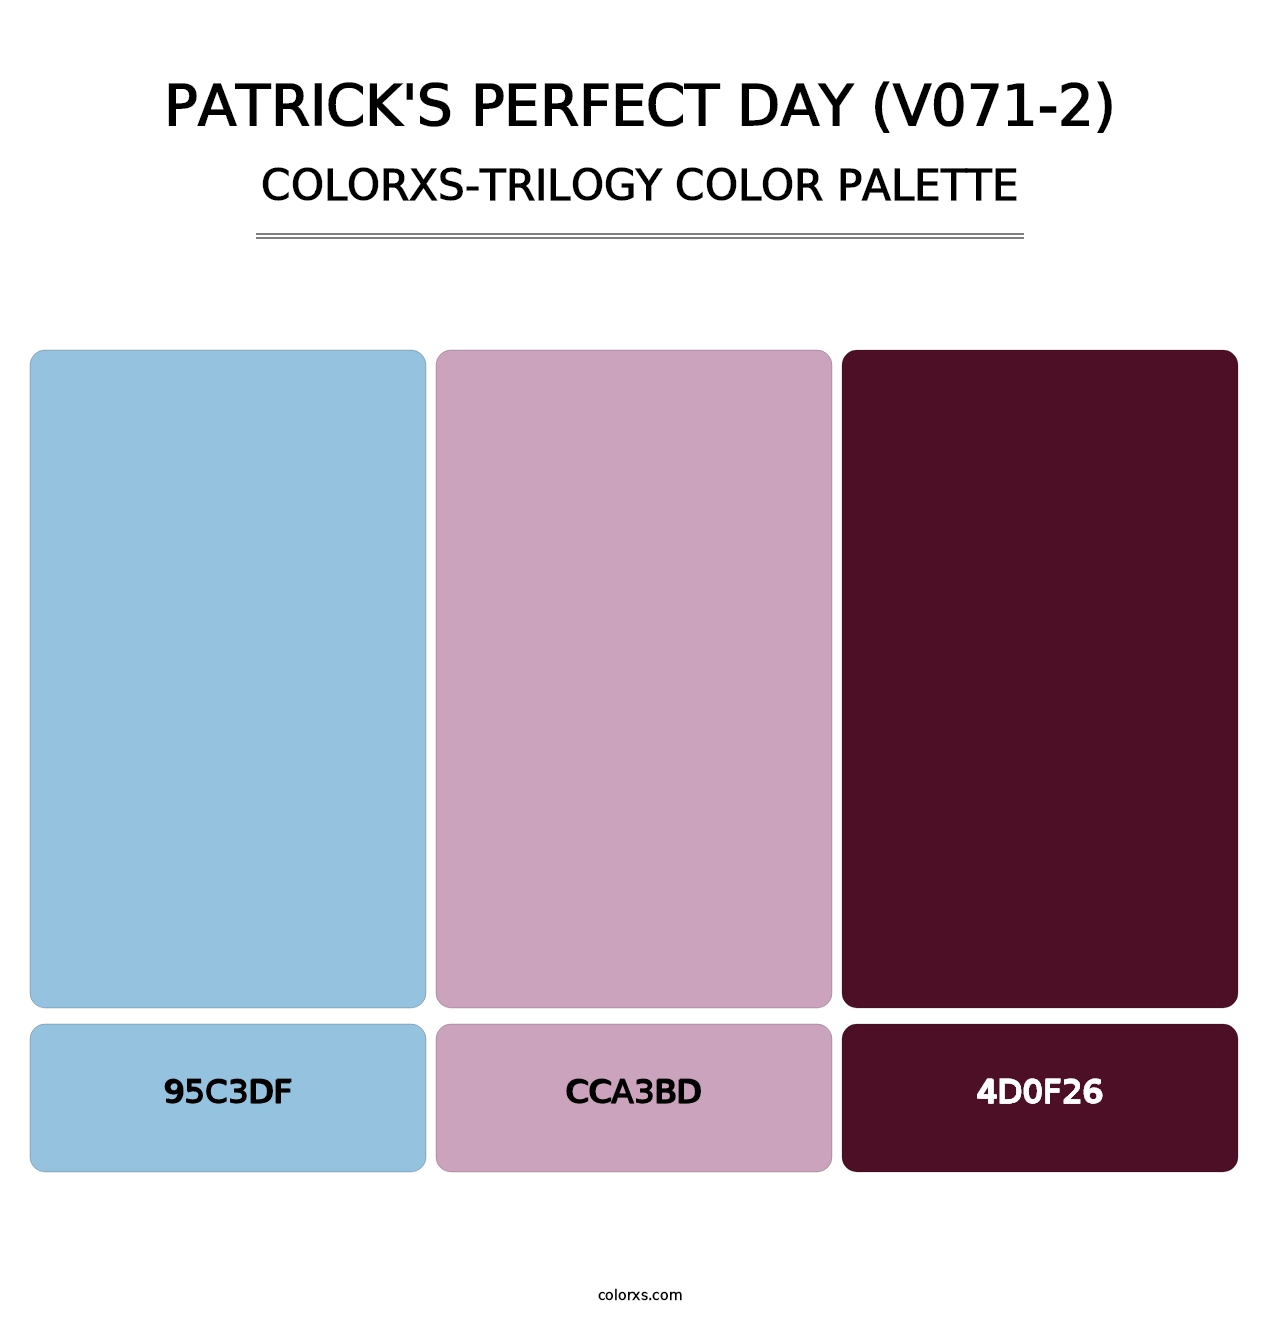 Patrick's Perfect Day (V071-2) - Colorxs Trilogy Palette